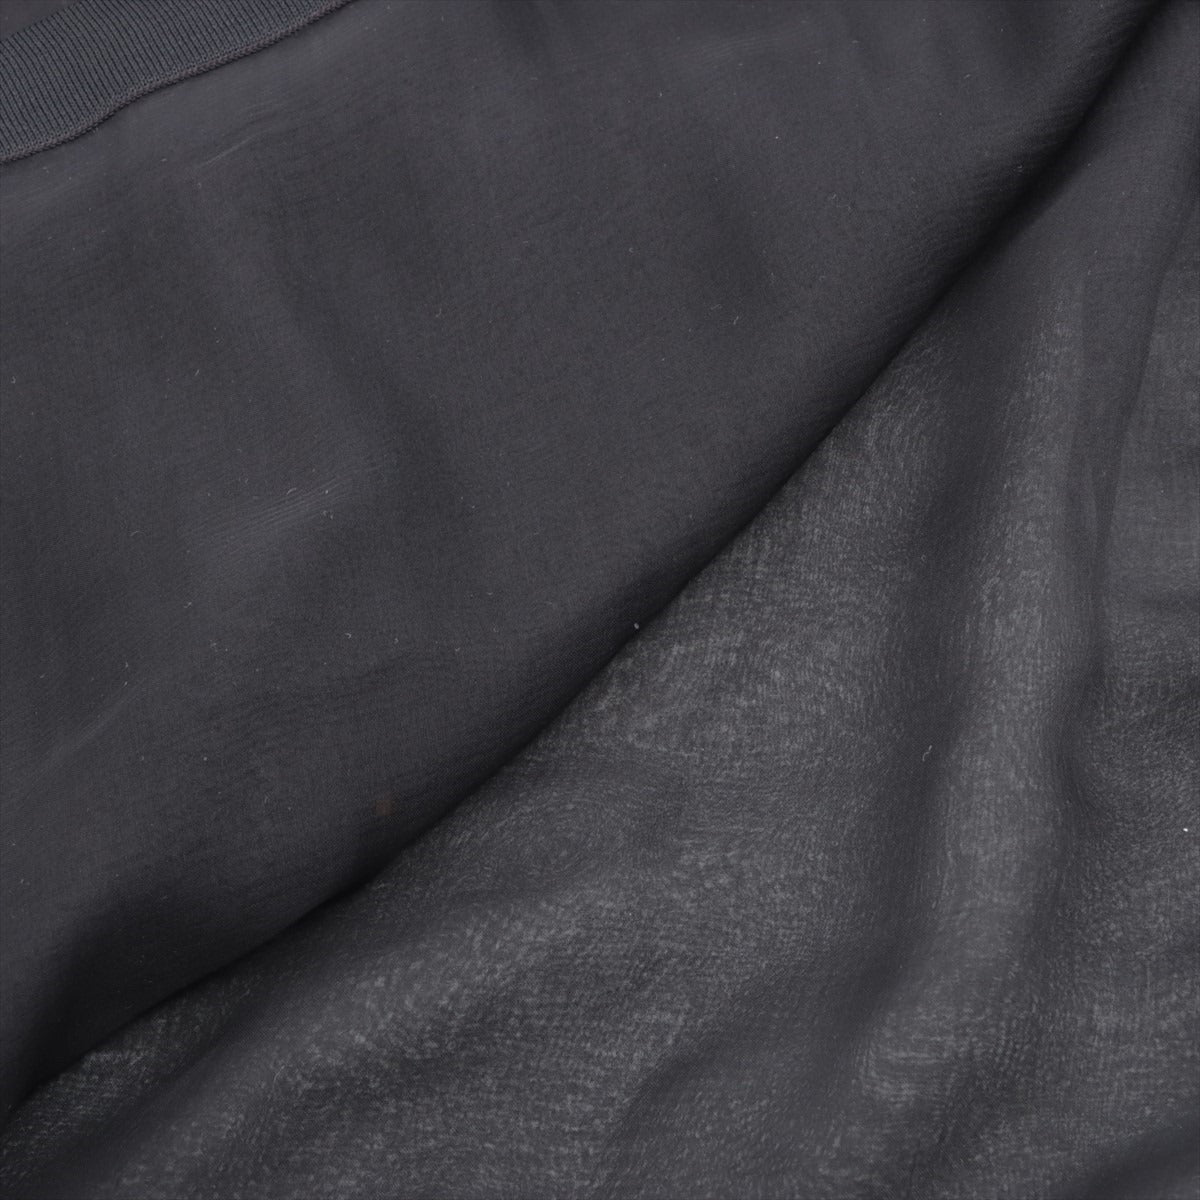 Hermès Stole Silk Black sheer